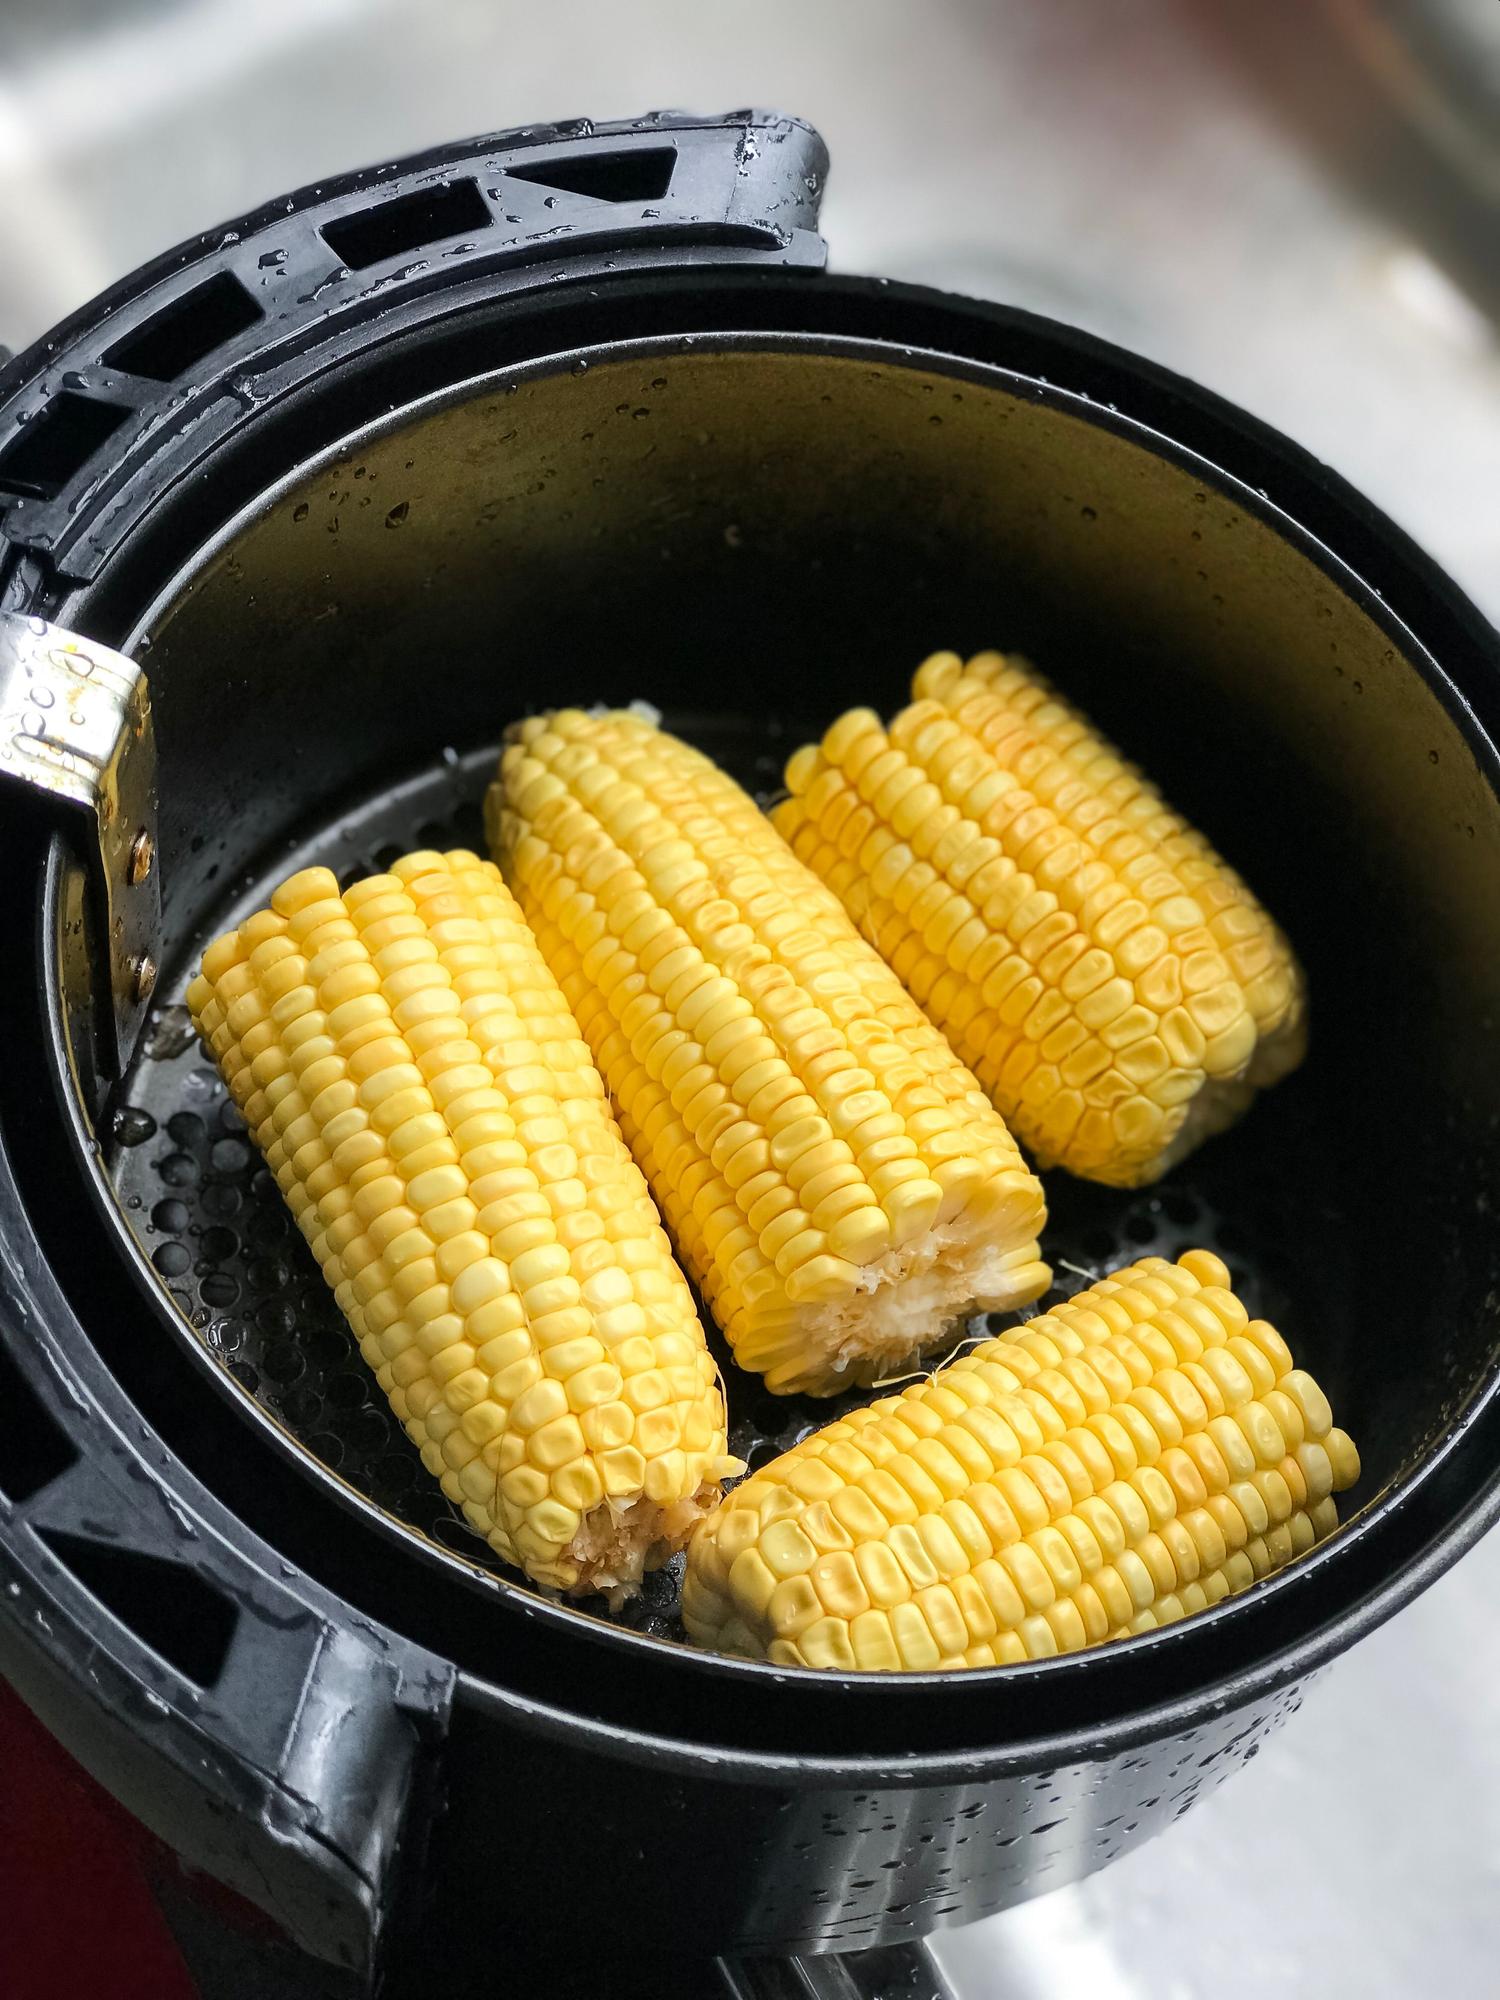 Cocinar mazorcas de maíz en freidora de aire es muy sencillo